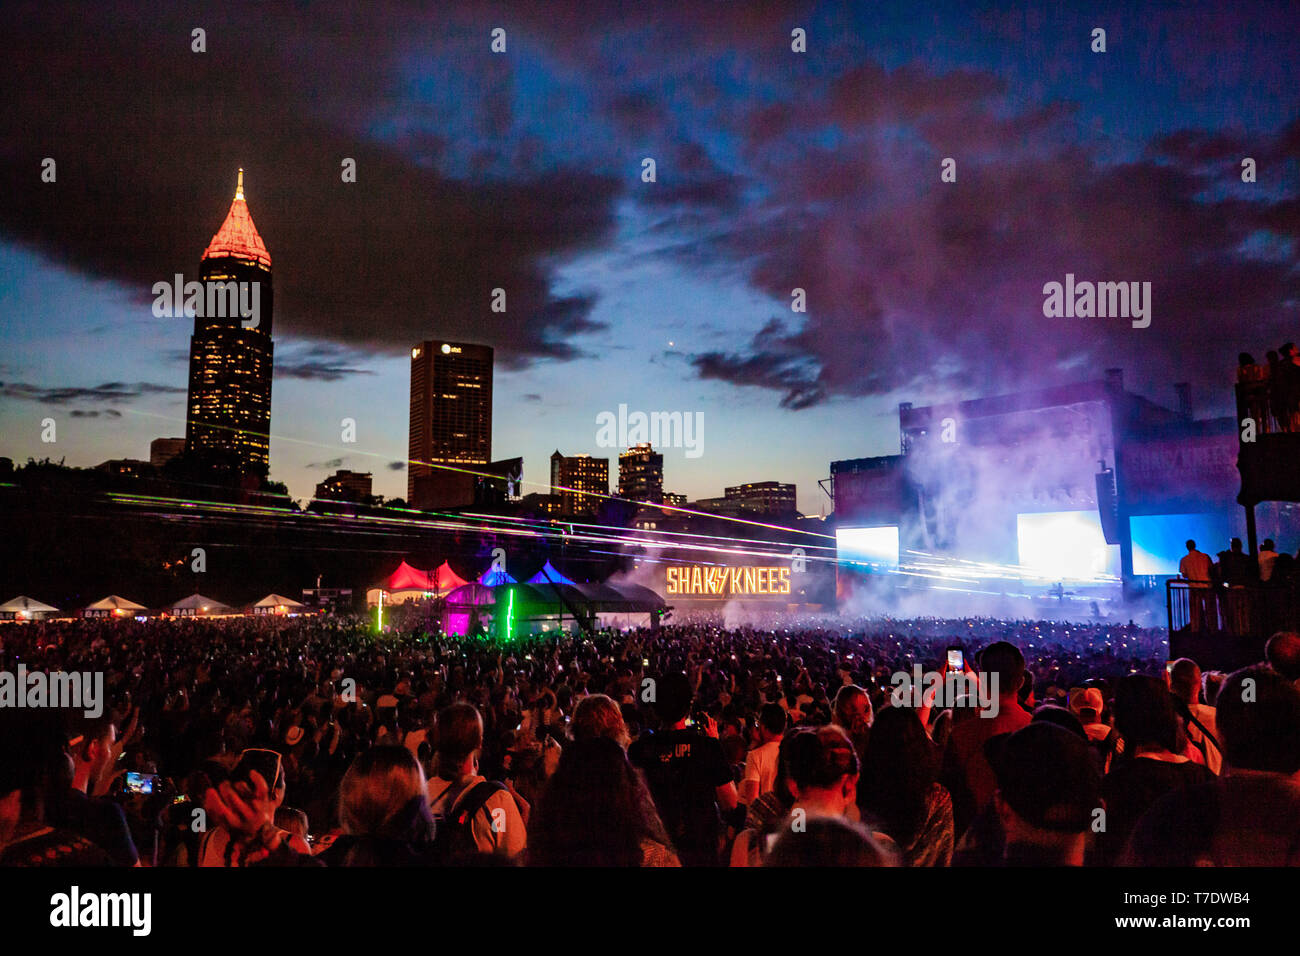 ATLANTA, GEORGIA - MAY 05: Tame Impala performs during day 3 of Shaky Knees Music Festival at Atlanta Central Park on May 04, 2019 in Atlanta, Georgia. Photo: Ryan Fleisher/imageSPACE/MediaPunch Stock Photo